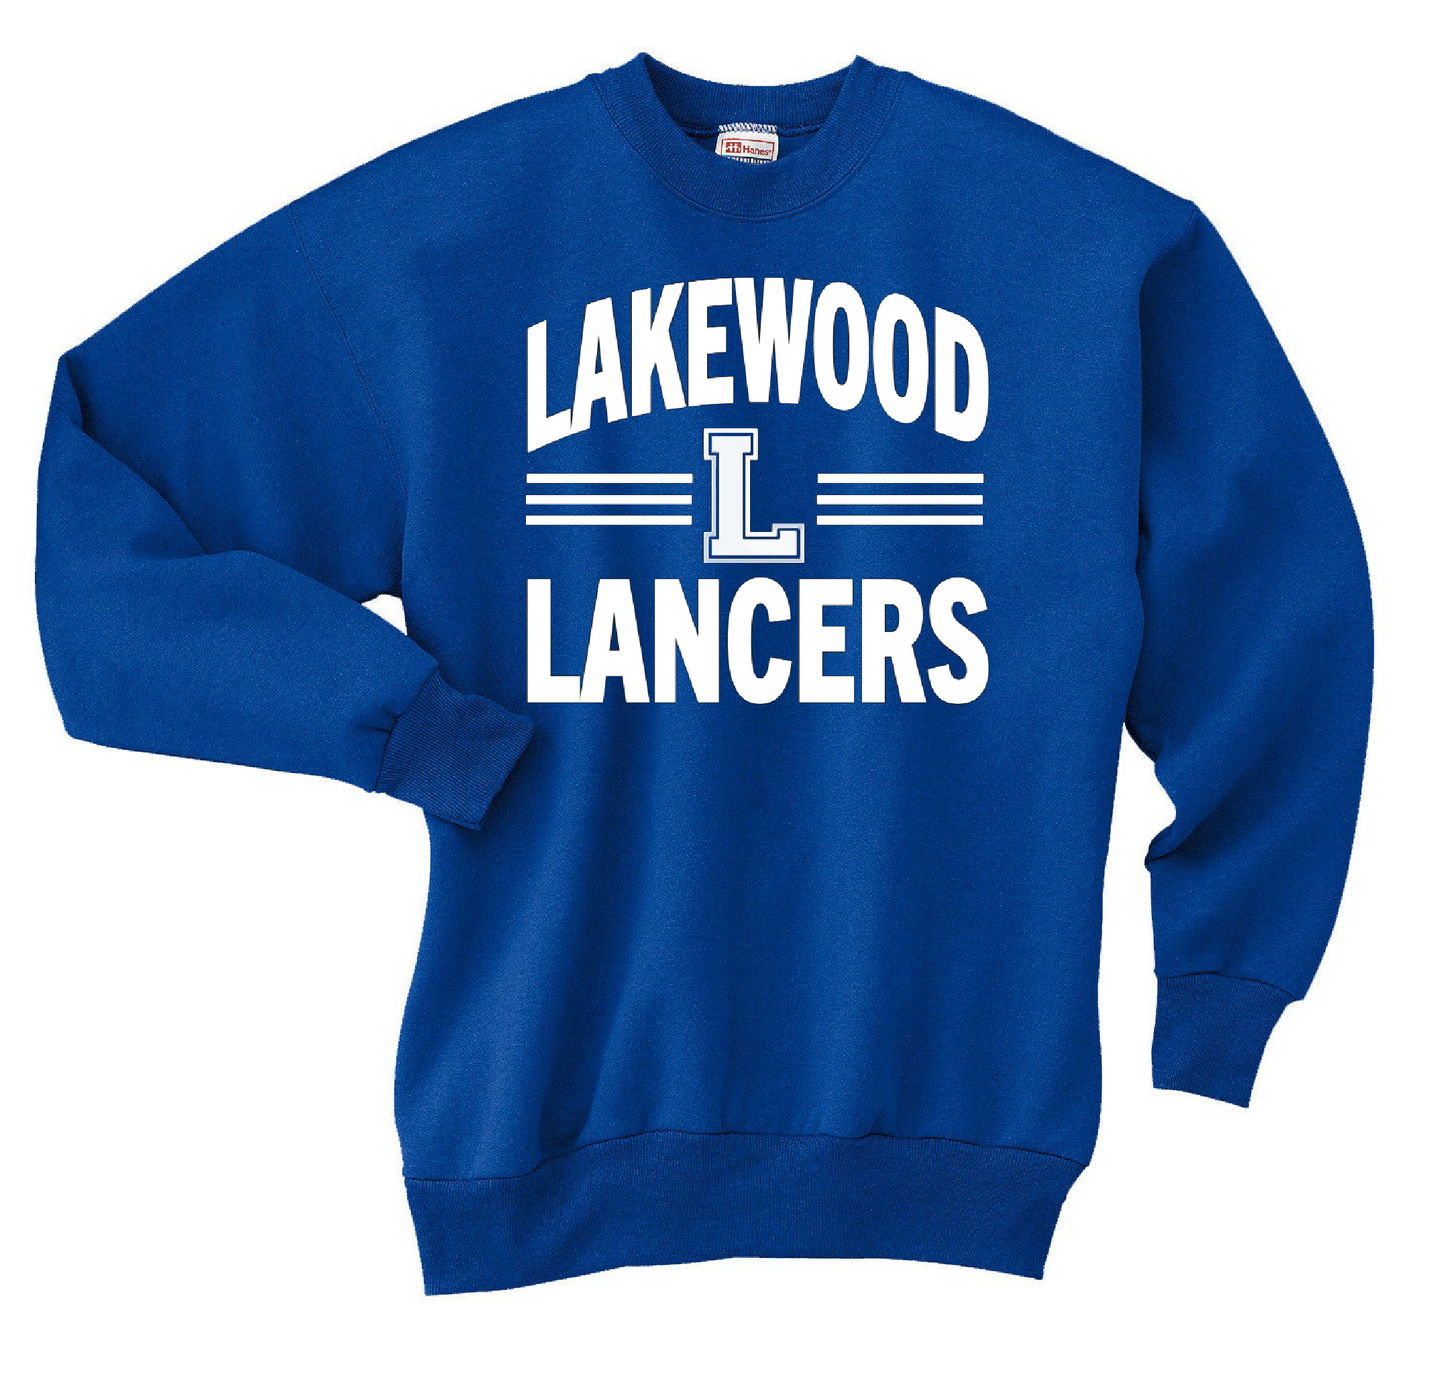 Lakewood Lancers Crewneck Sweatshirt